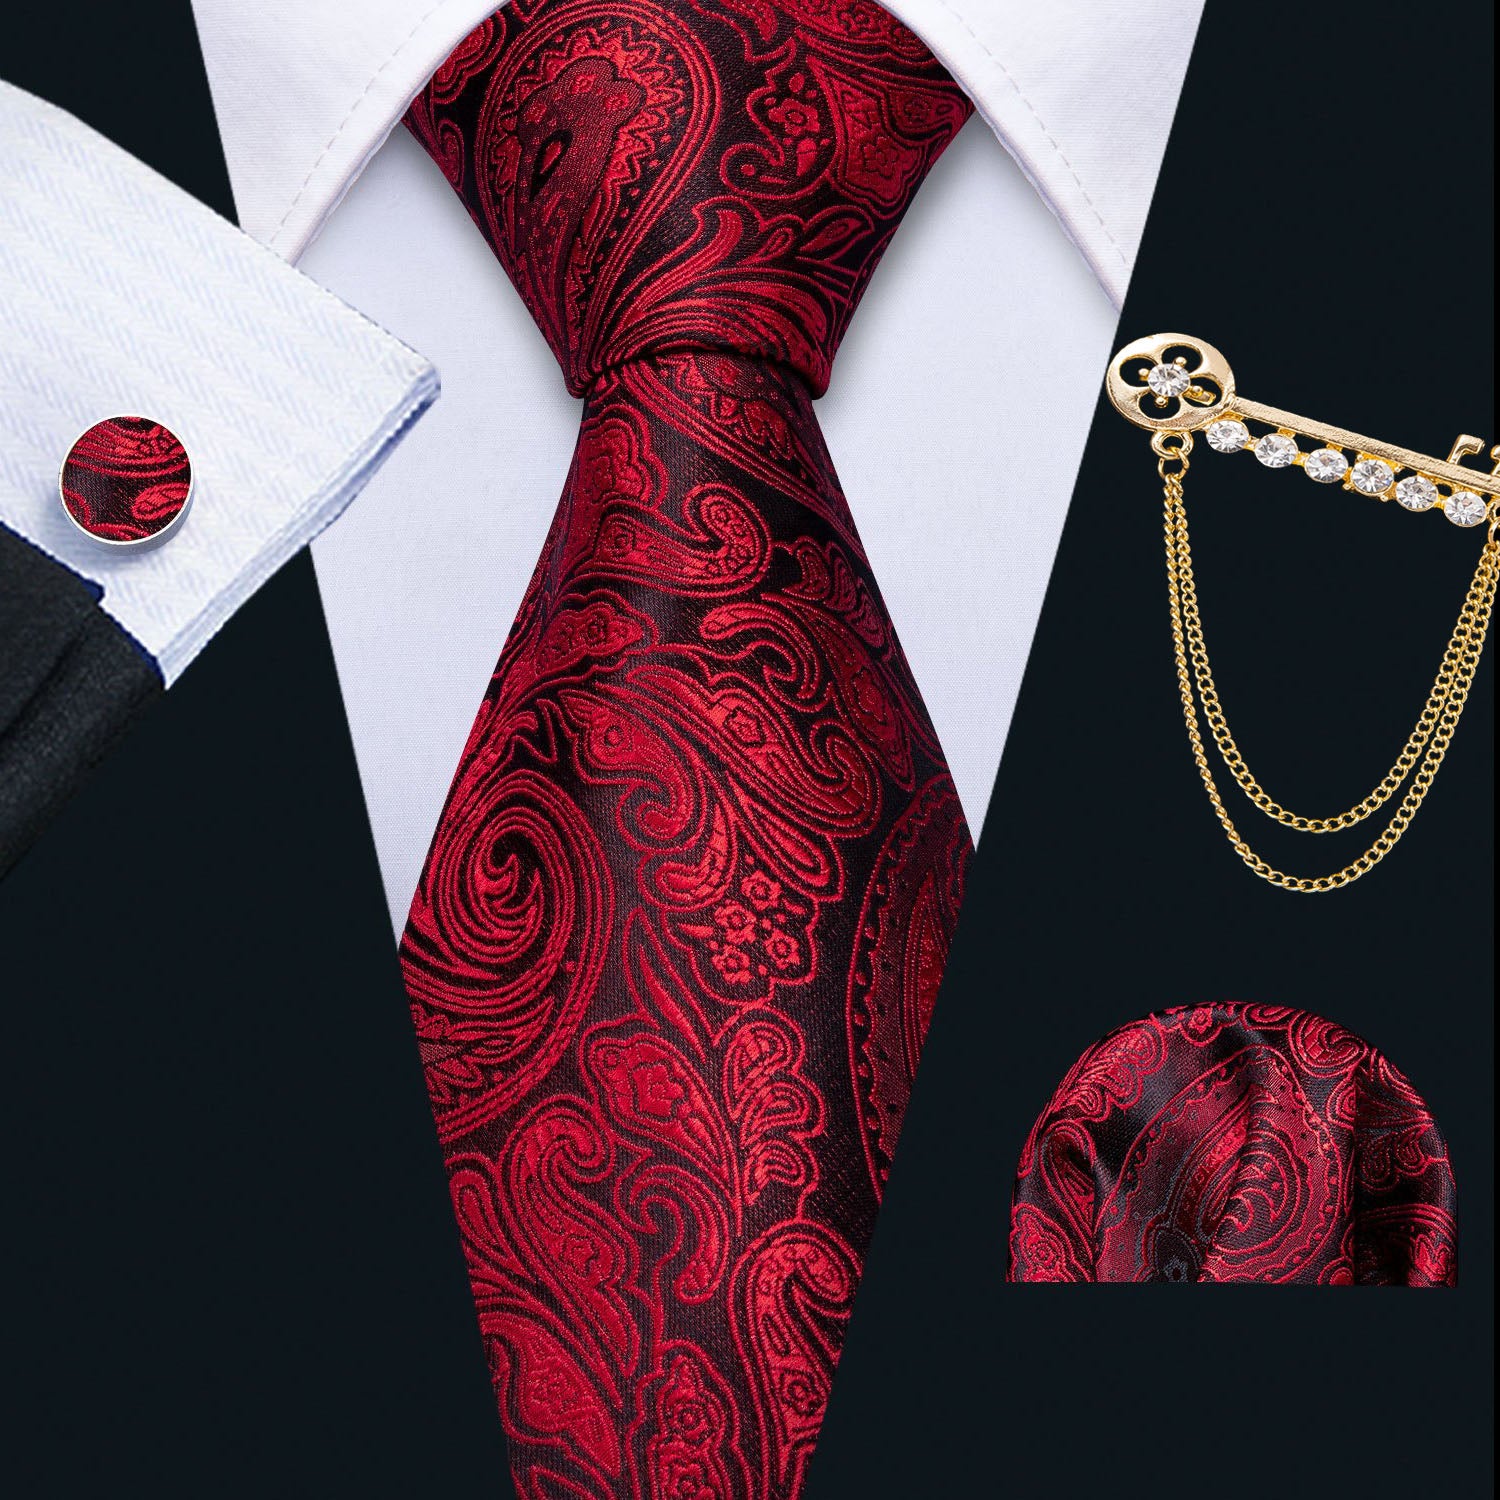 Red Black Paisley Floral Men's Tie Lapel Pin Brooch Silk Tie Pocket Square Cufflinks Set Wedding Business Party